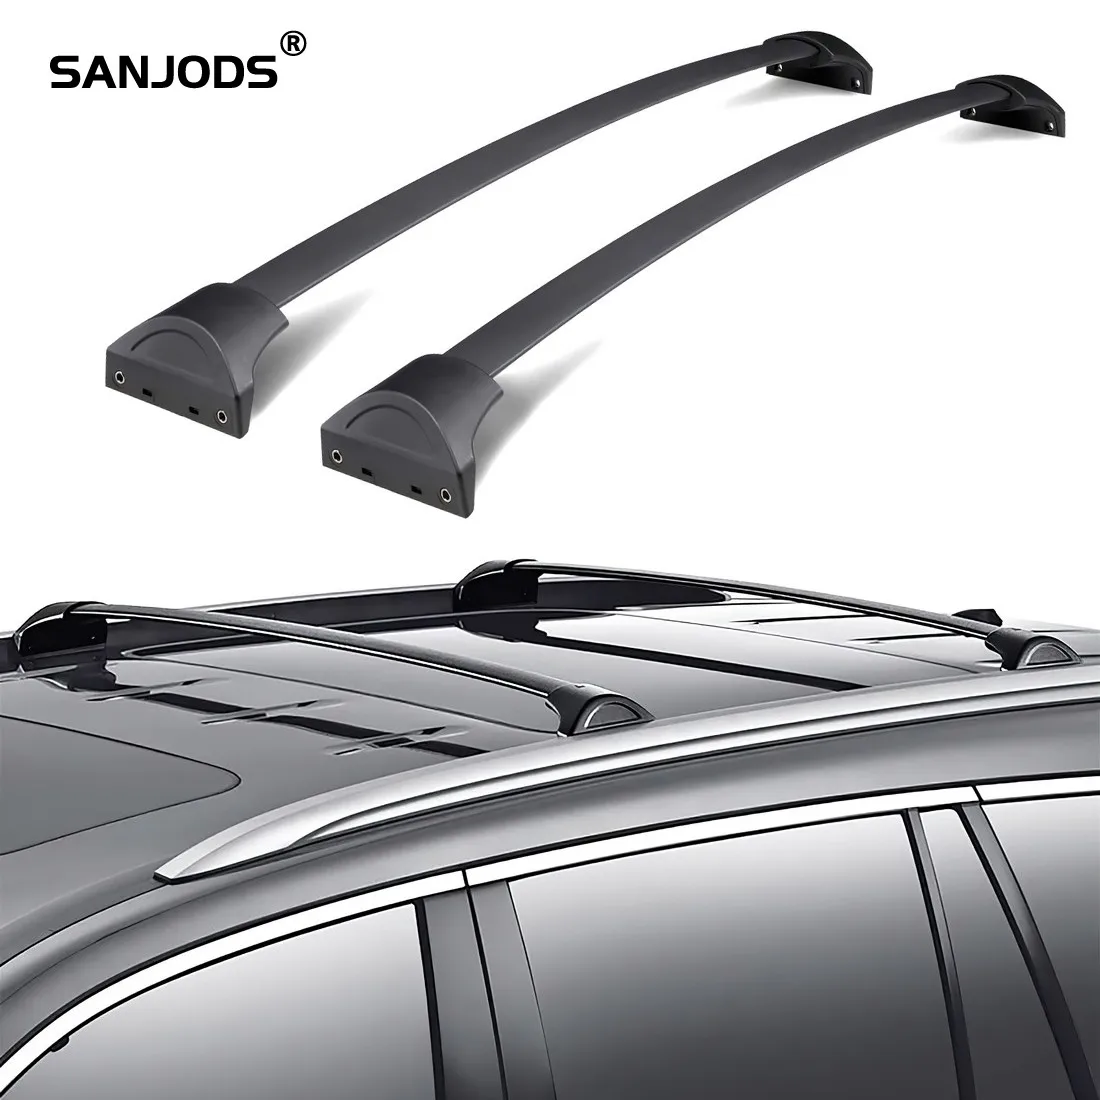 Viaje ligero de aluminio rieles baca coche barras cruzadas para adaptarse Volvo XC70 